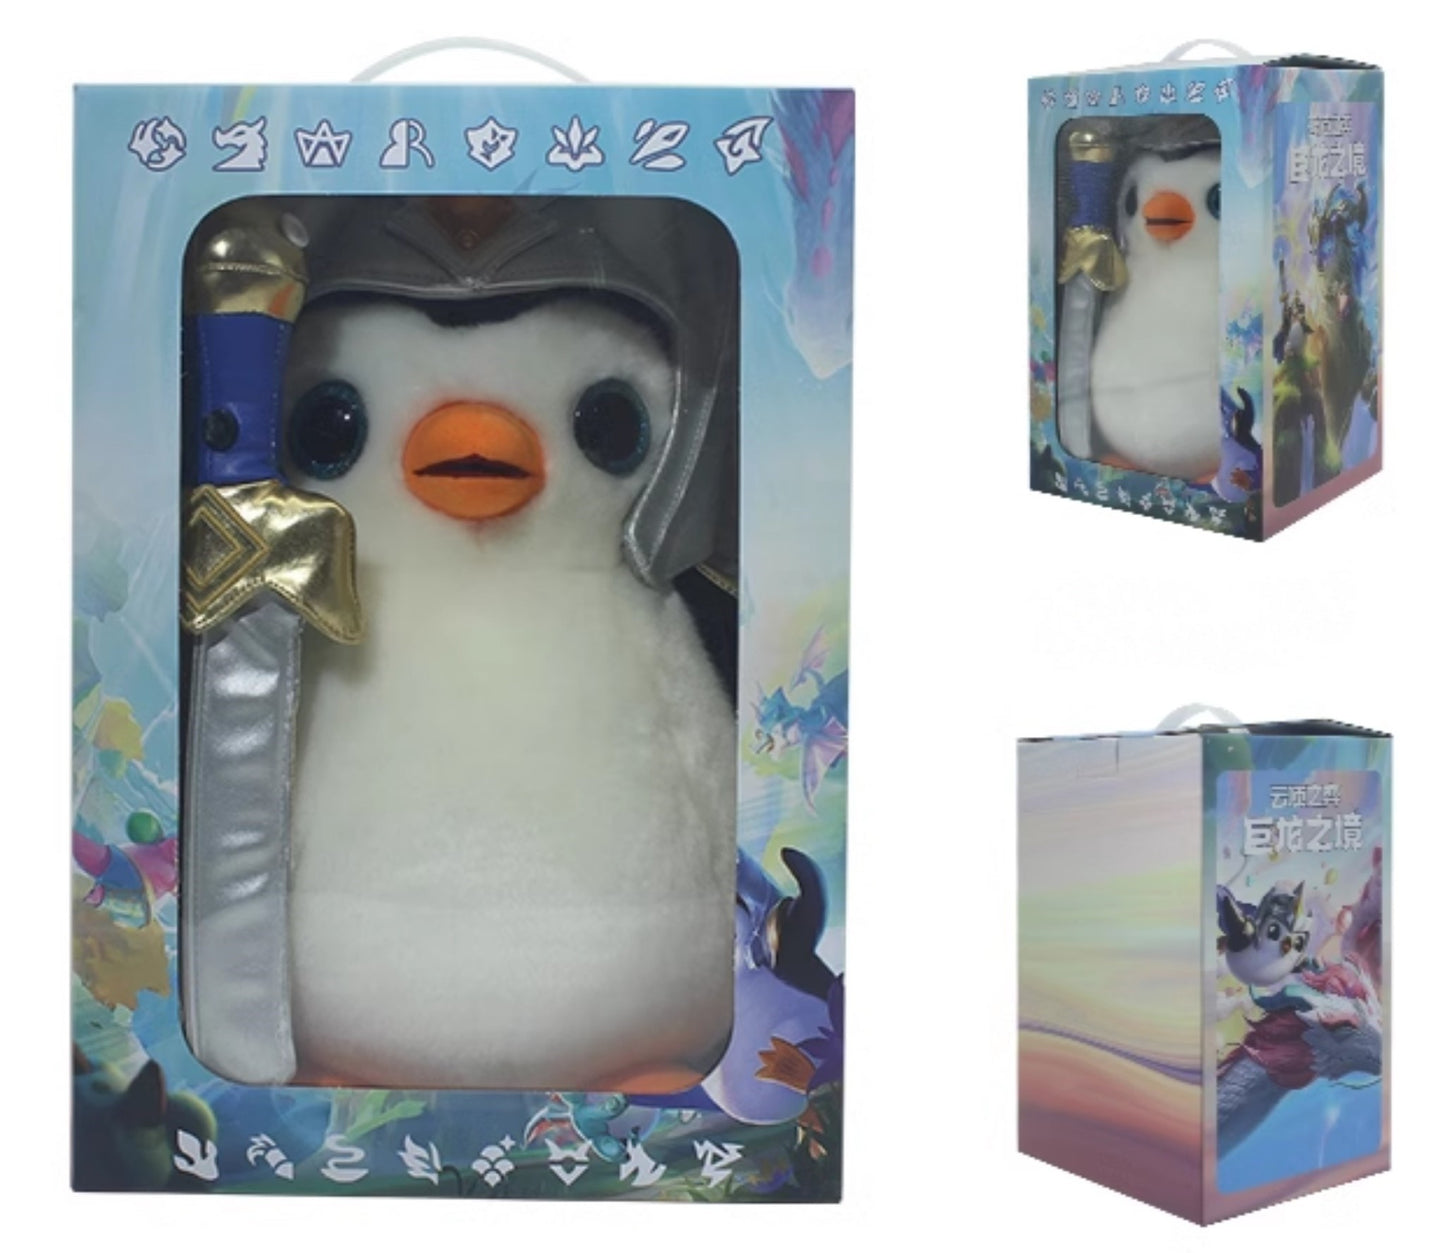 LOVEBUFF League of Legends LOL Featherknight Penguin Stuffed Animal Penguin Plushie Toy